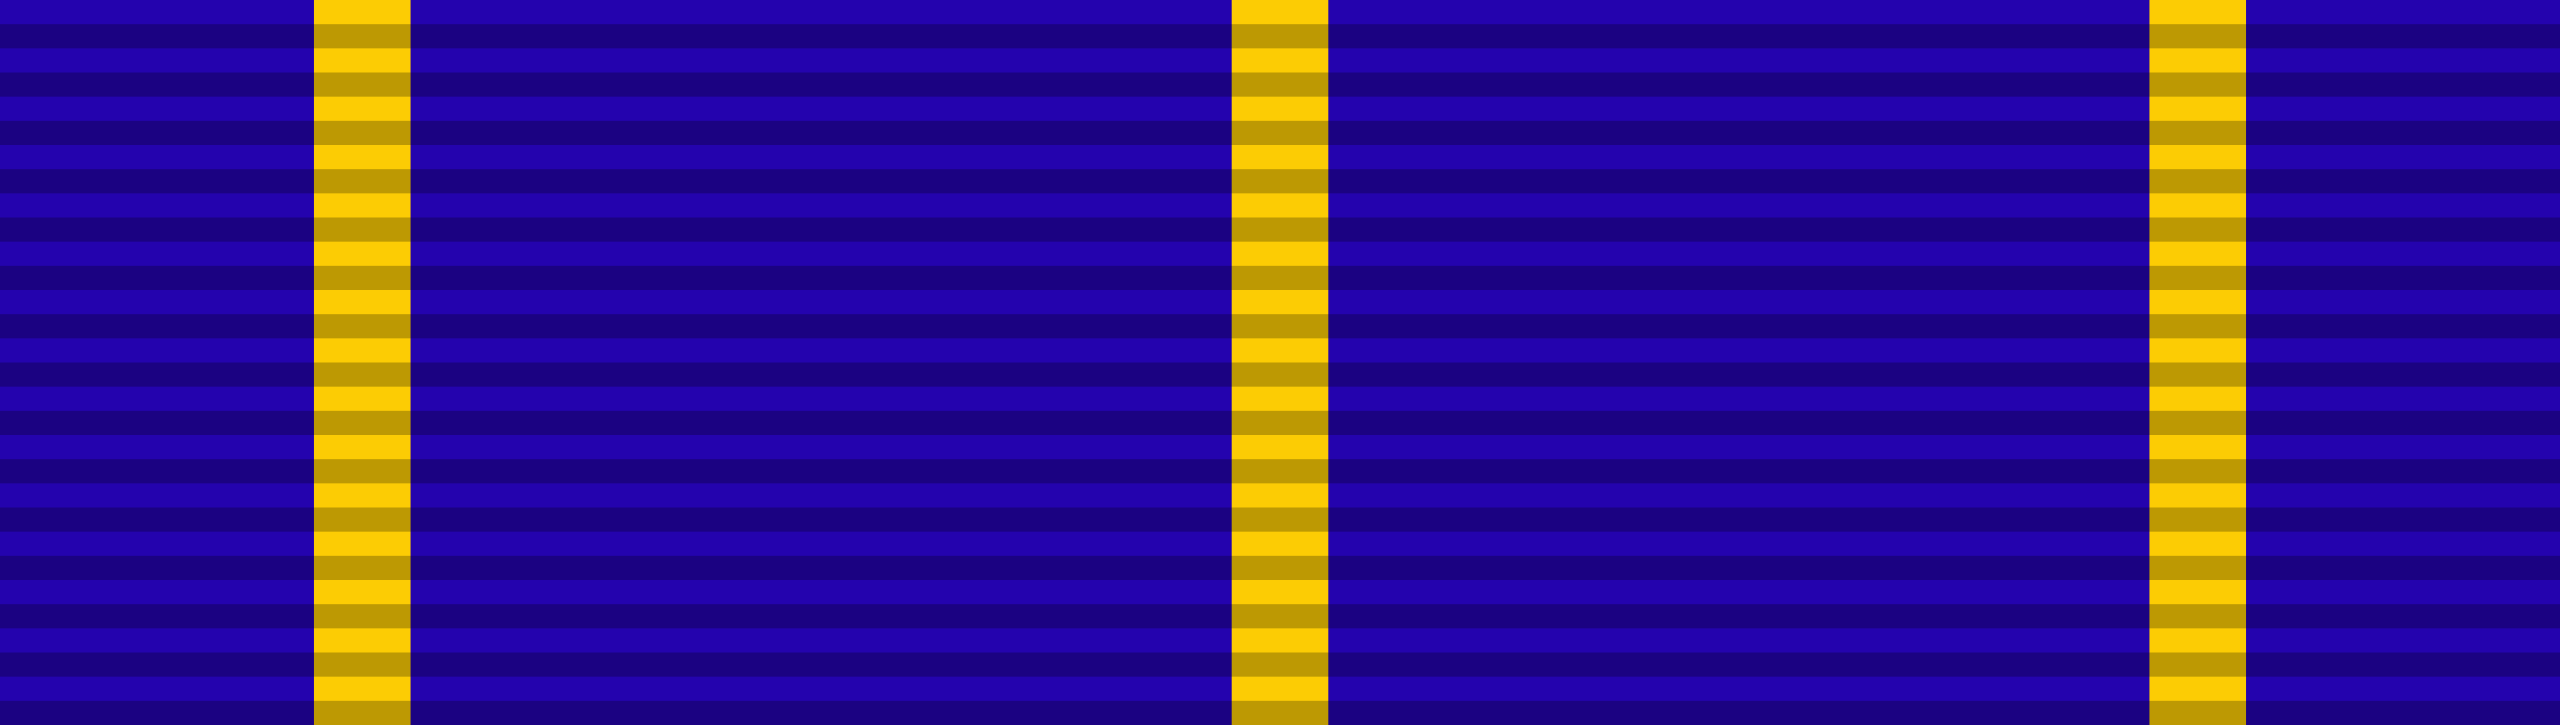 Distinguished Marksmanship Ribbon - Wikipedia